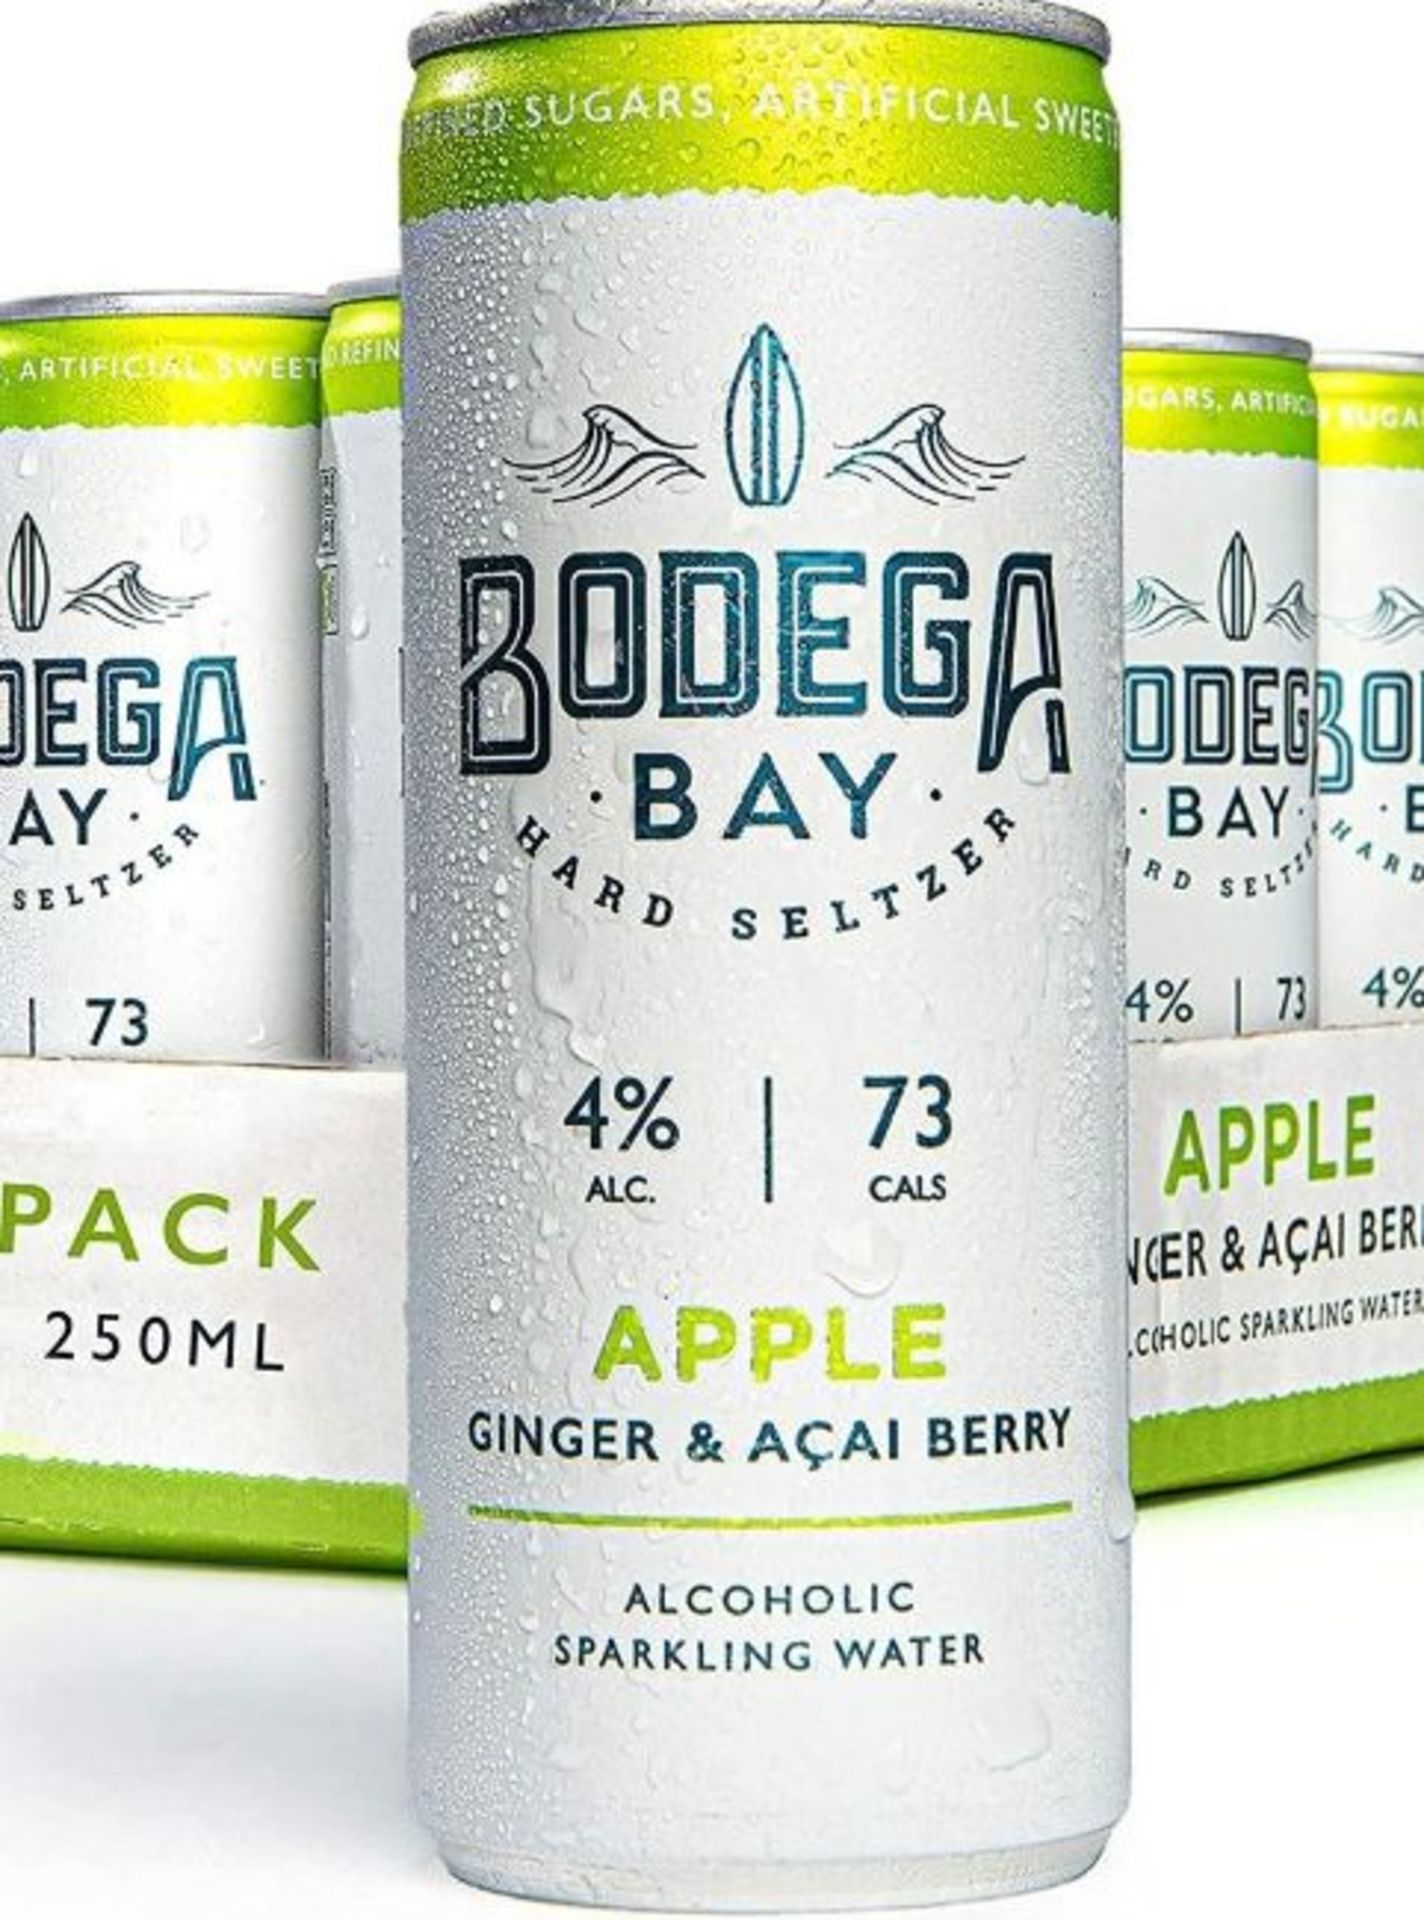 24 x Bodega Bay Hard Seltzer 250ml Alcoholic Sparkling Water Drinks - Apple Ginger & Acai Berry - 4% - Image 7 of 7